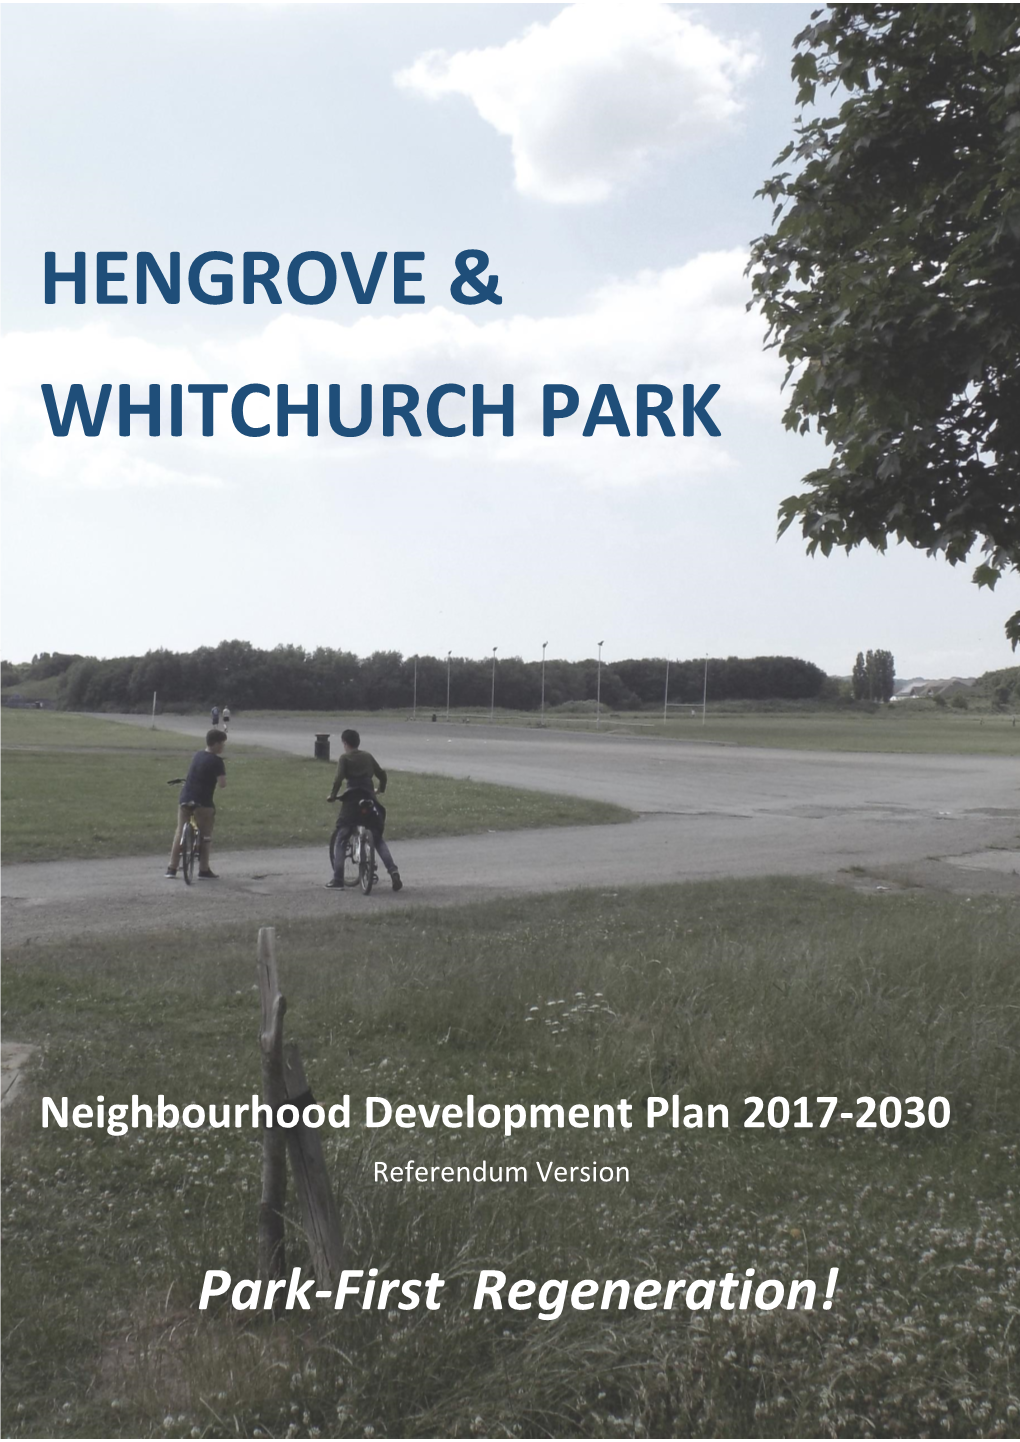 Hengrove & Whitchurch Park